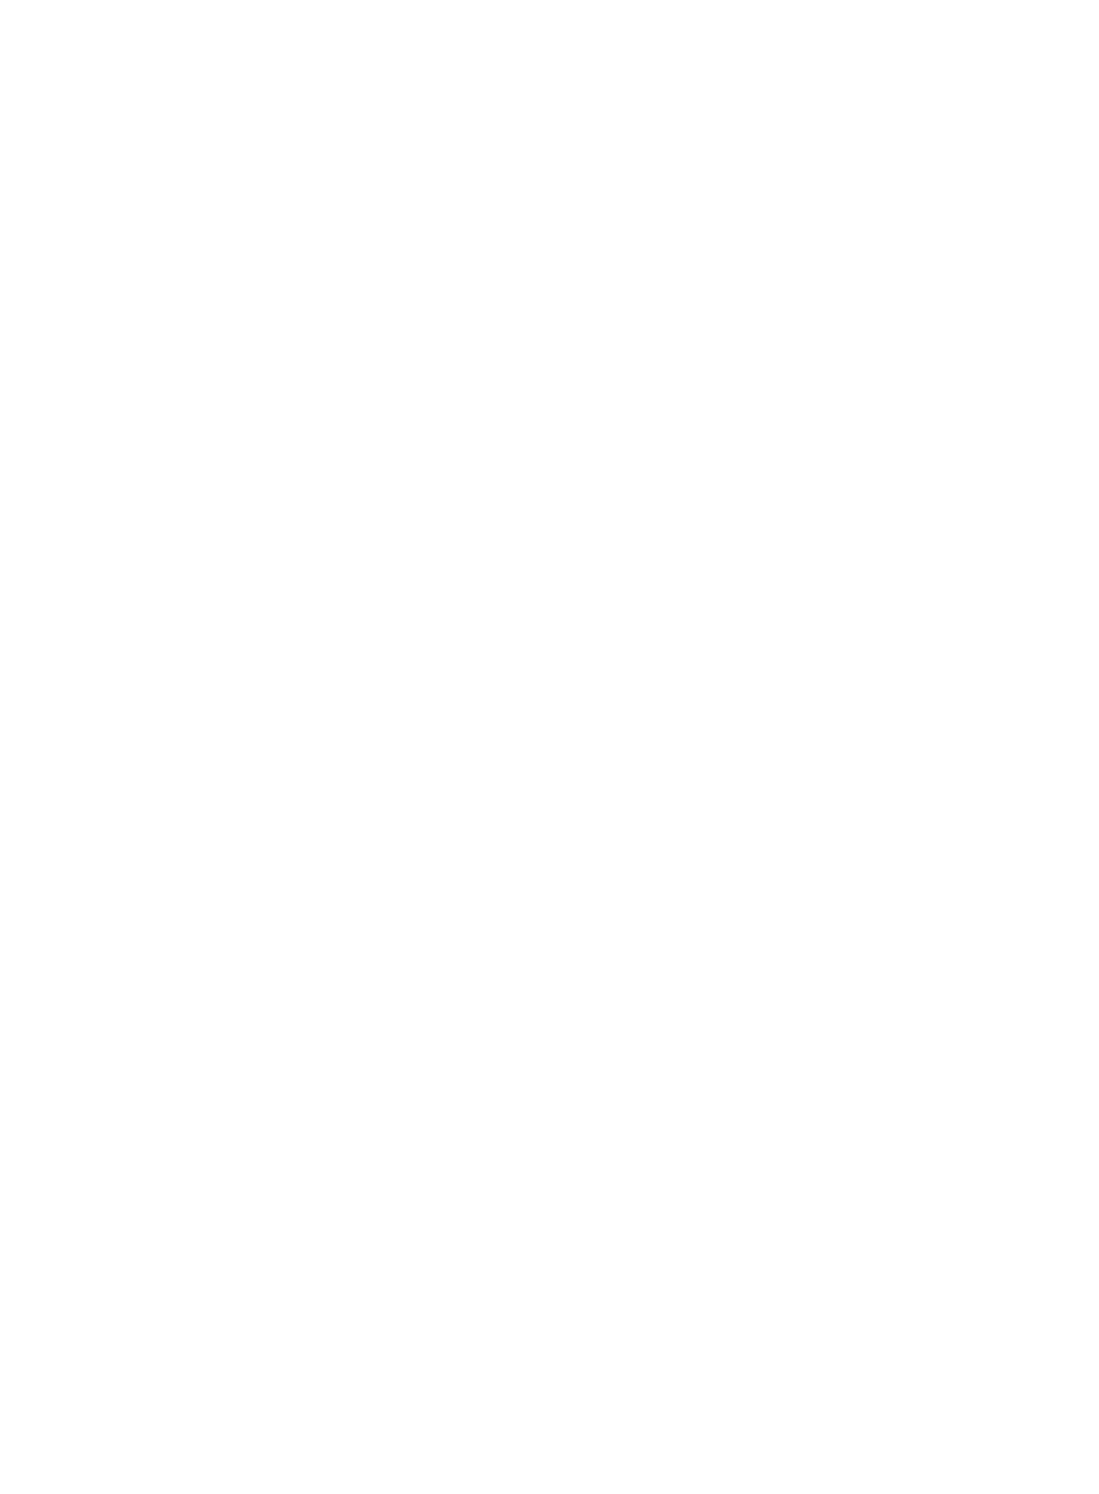 Emaar Properties logo pour fonds sombres (PNG transparent)